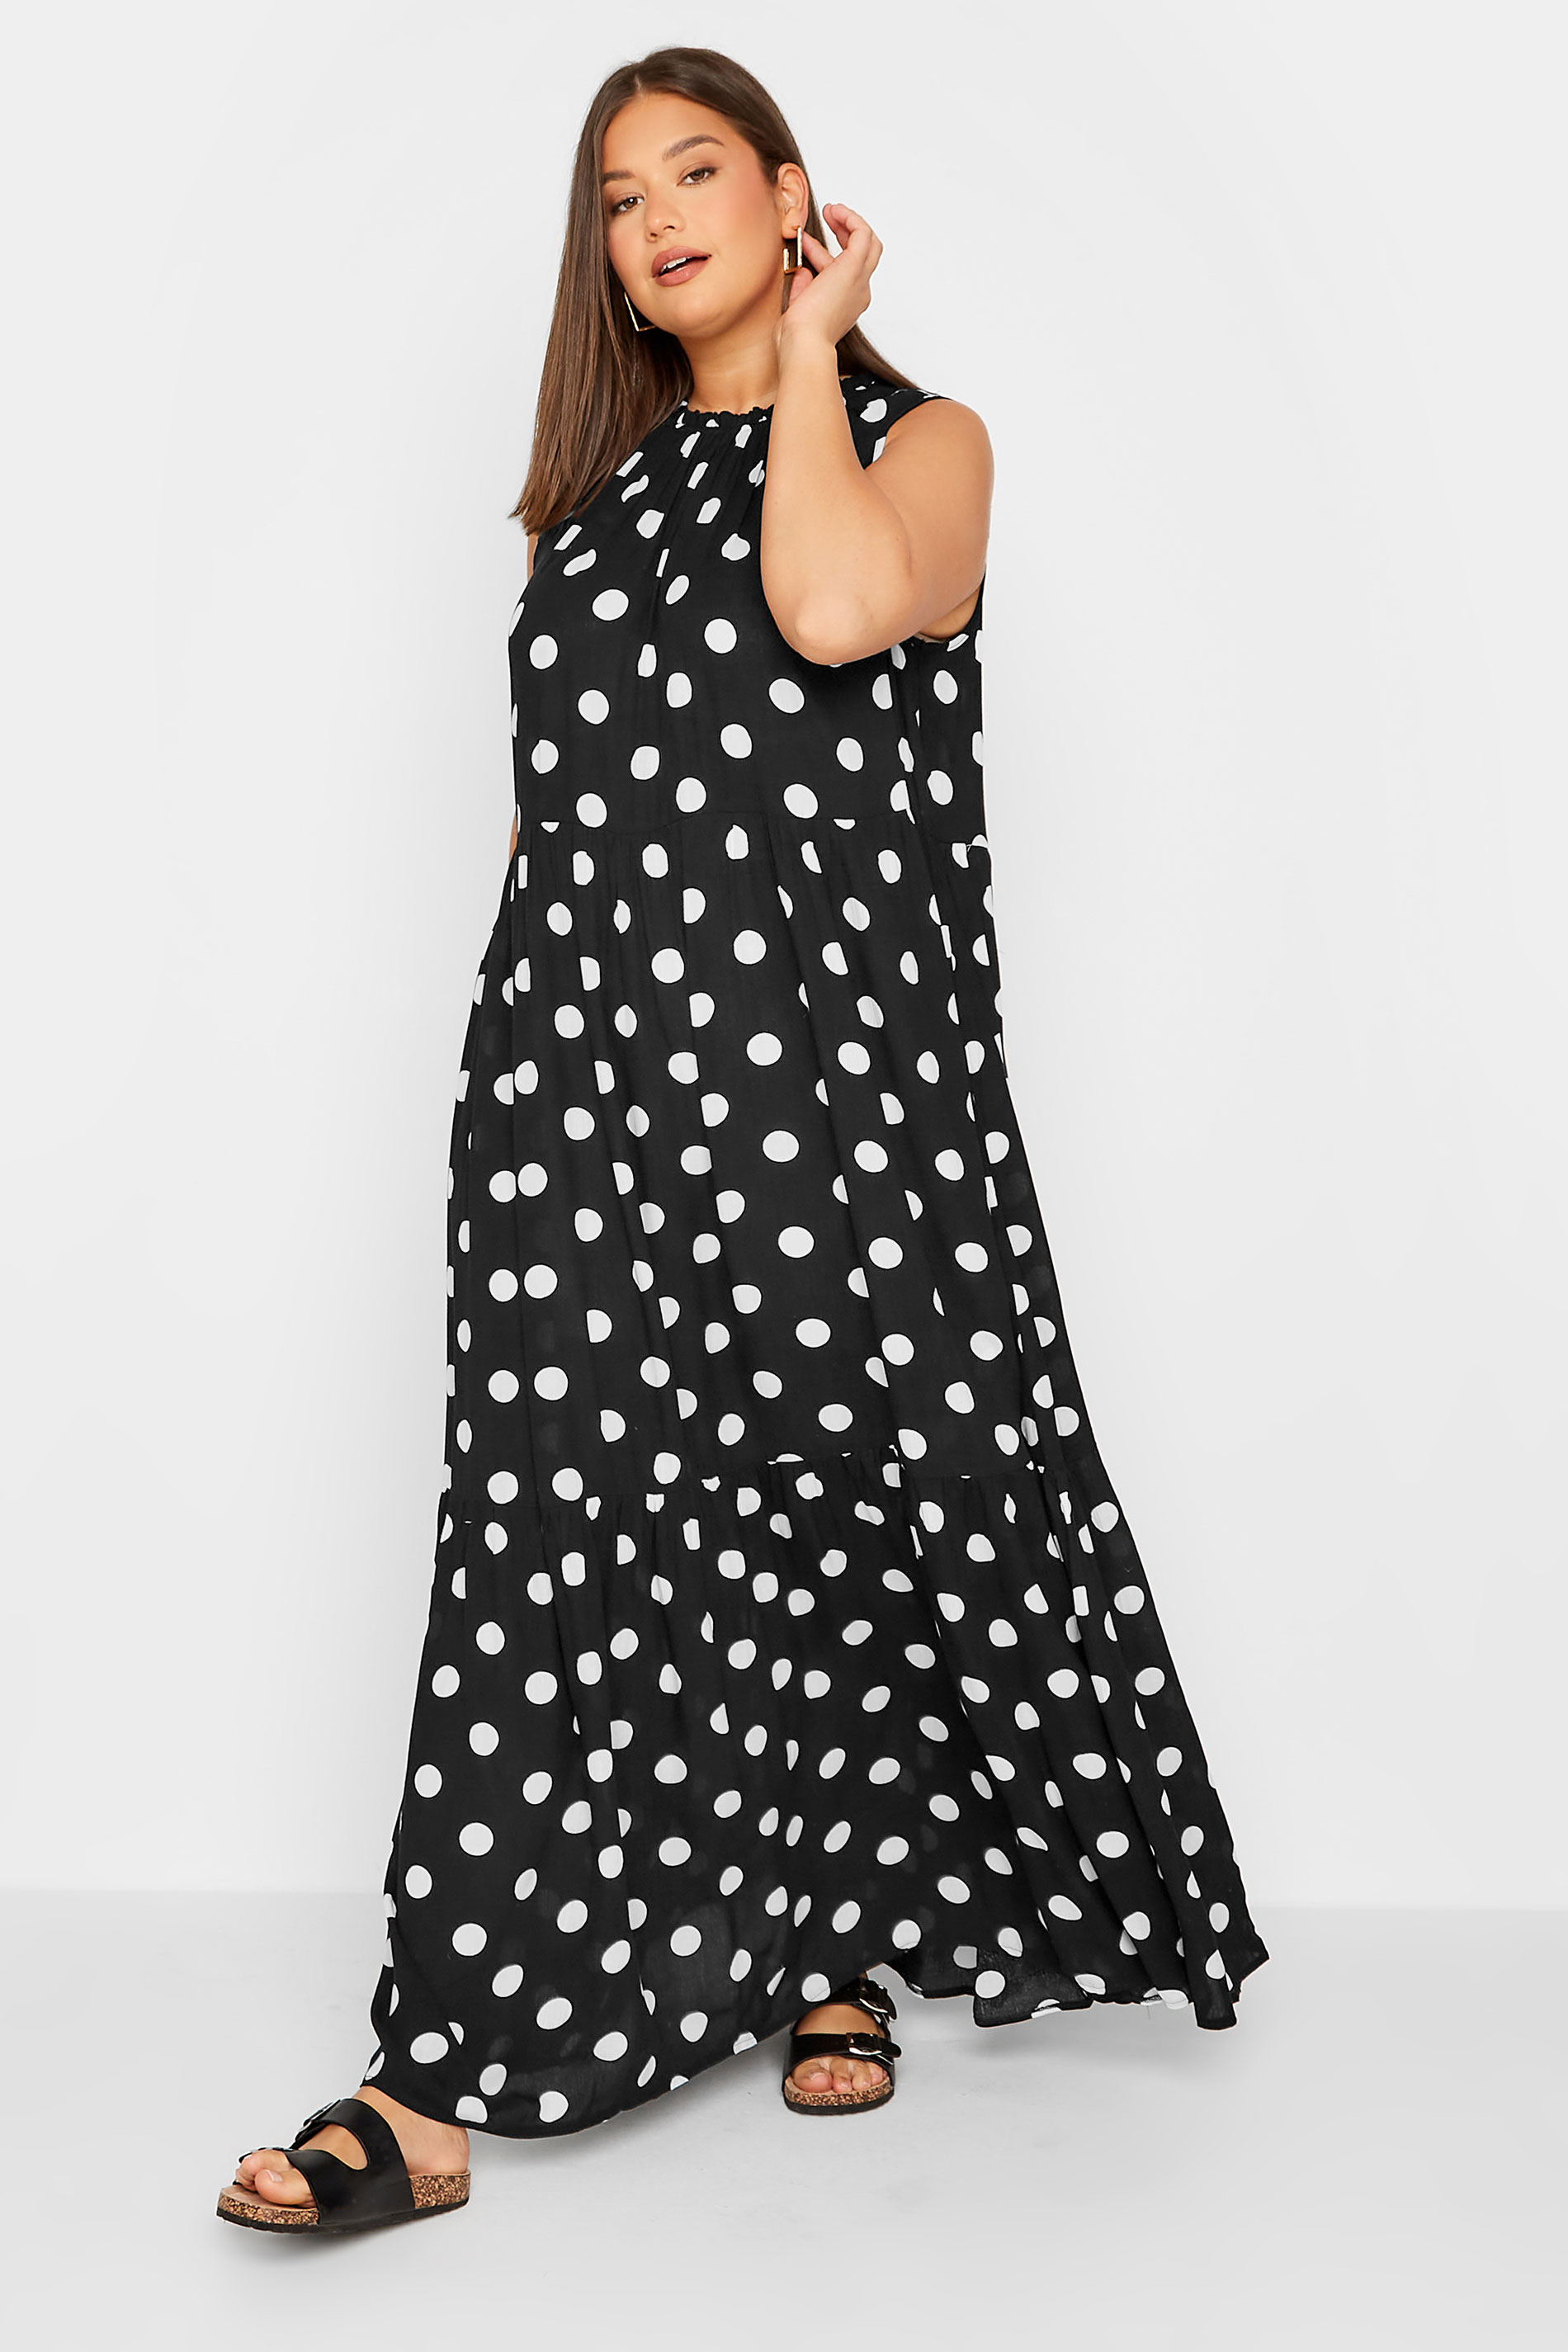 LTS Tall Women's Black Polka Dot Maxi Dress | Long Tall Sally 1